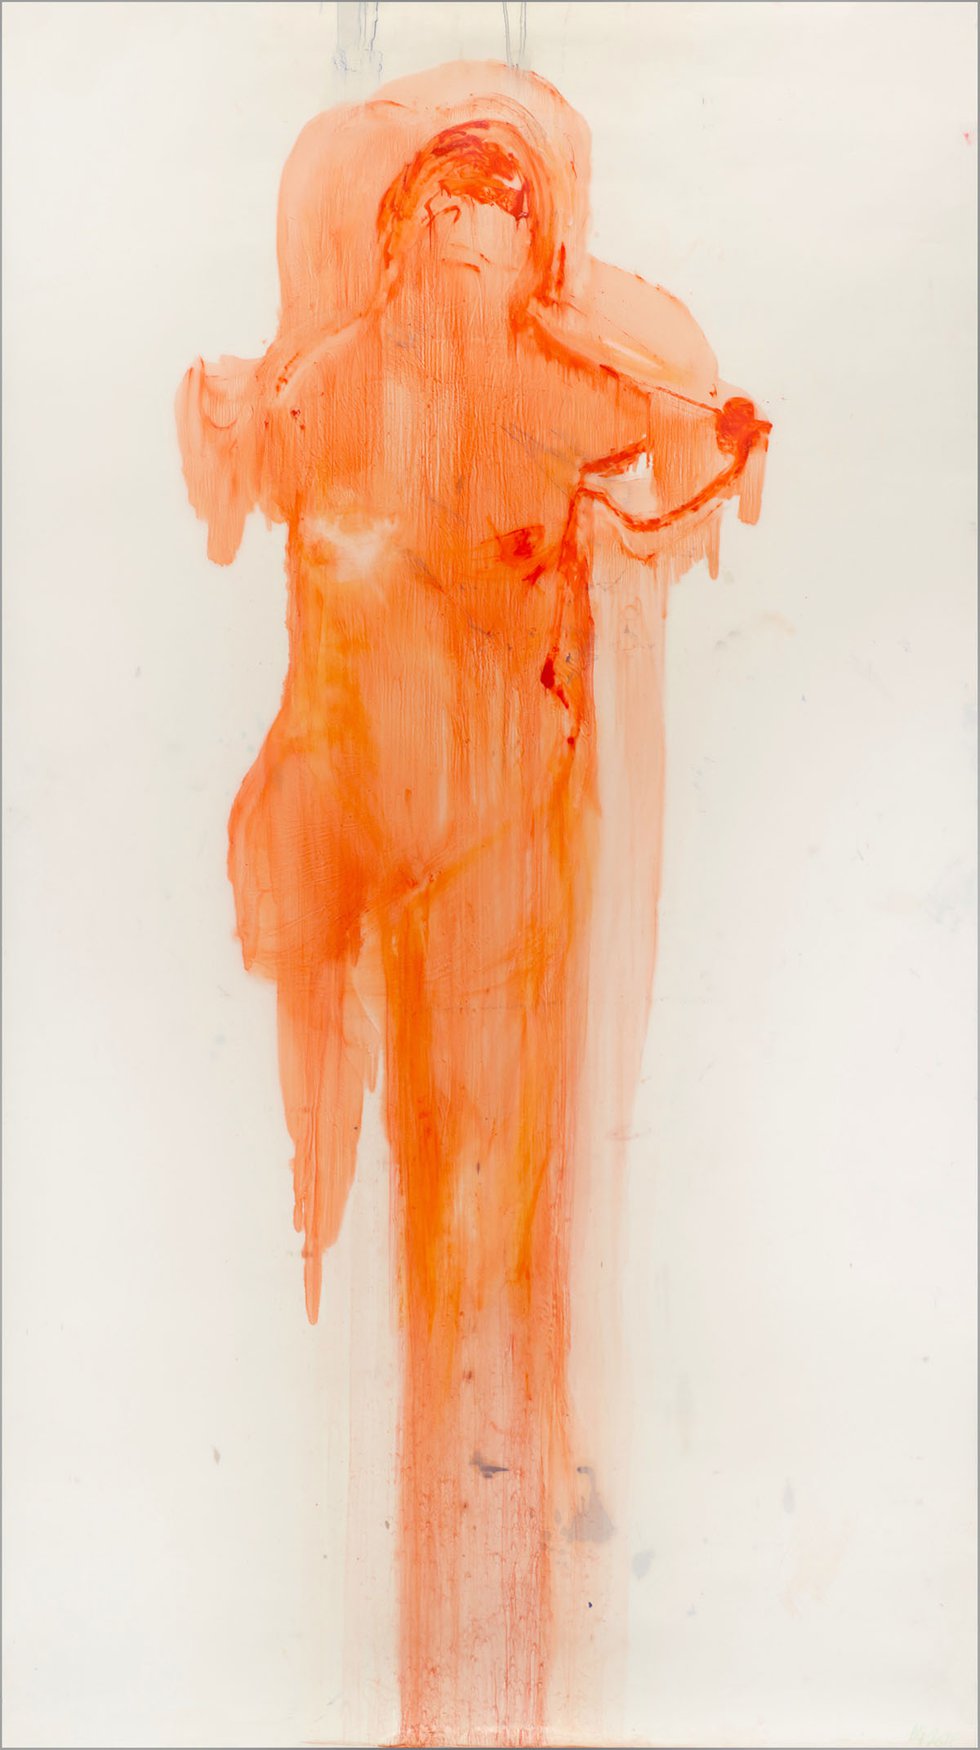 Angela Grossmann, “Tangerine,” 2017